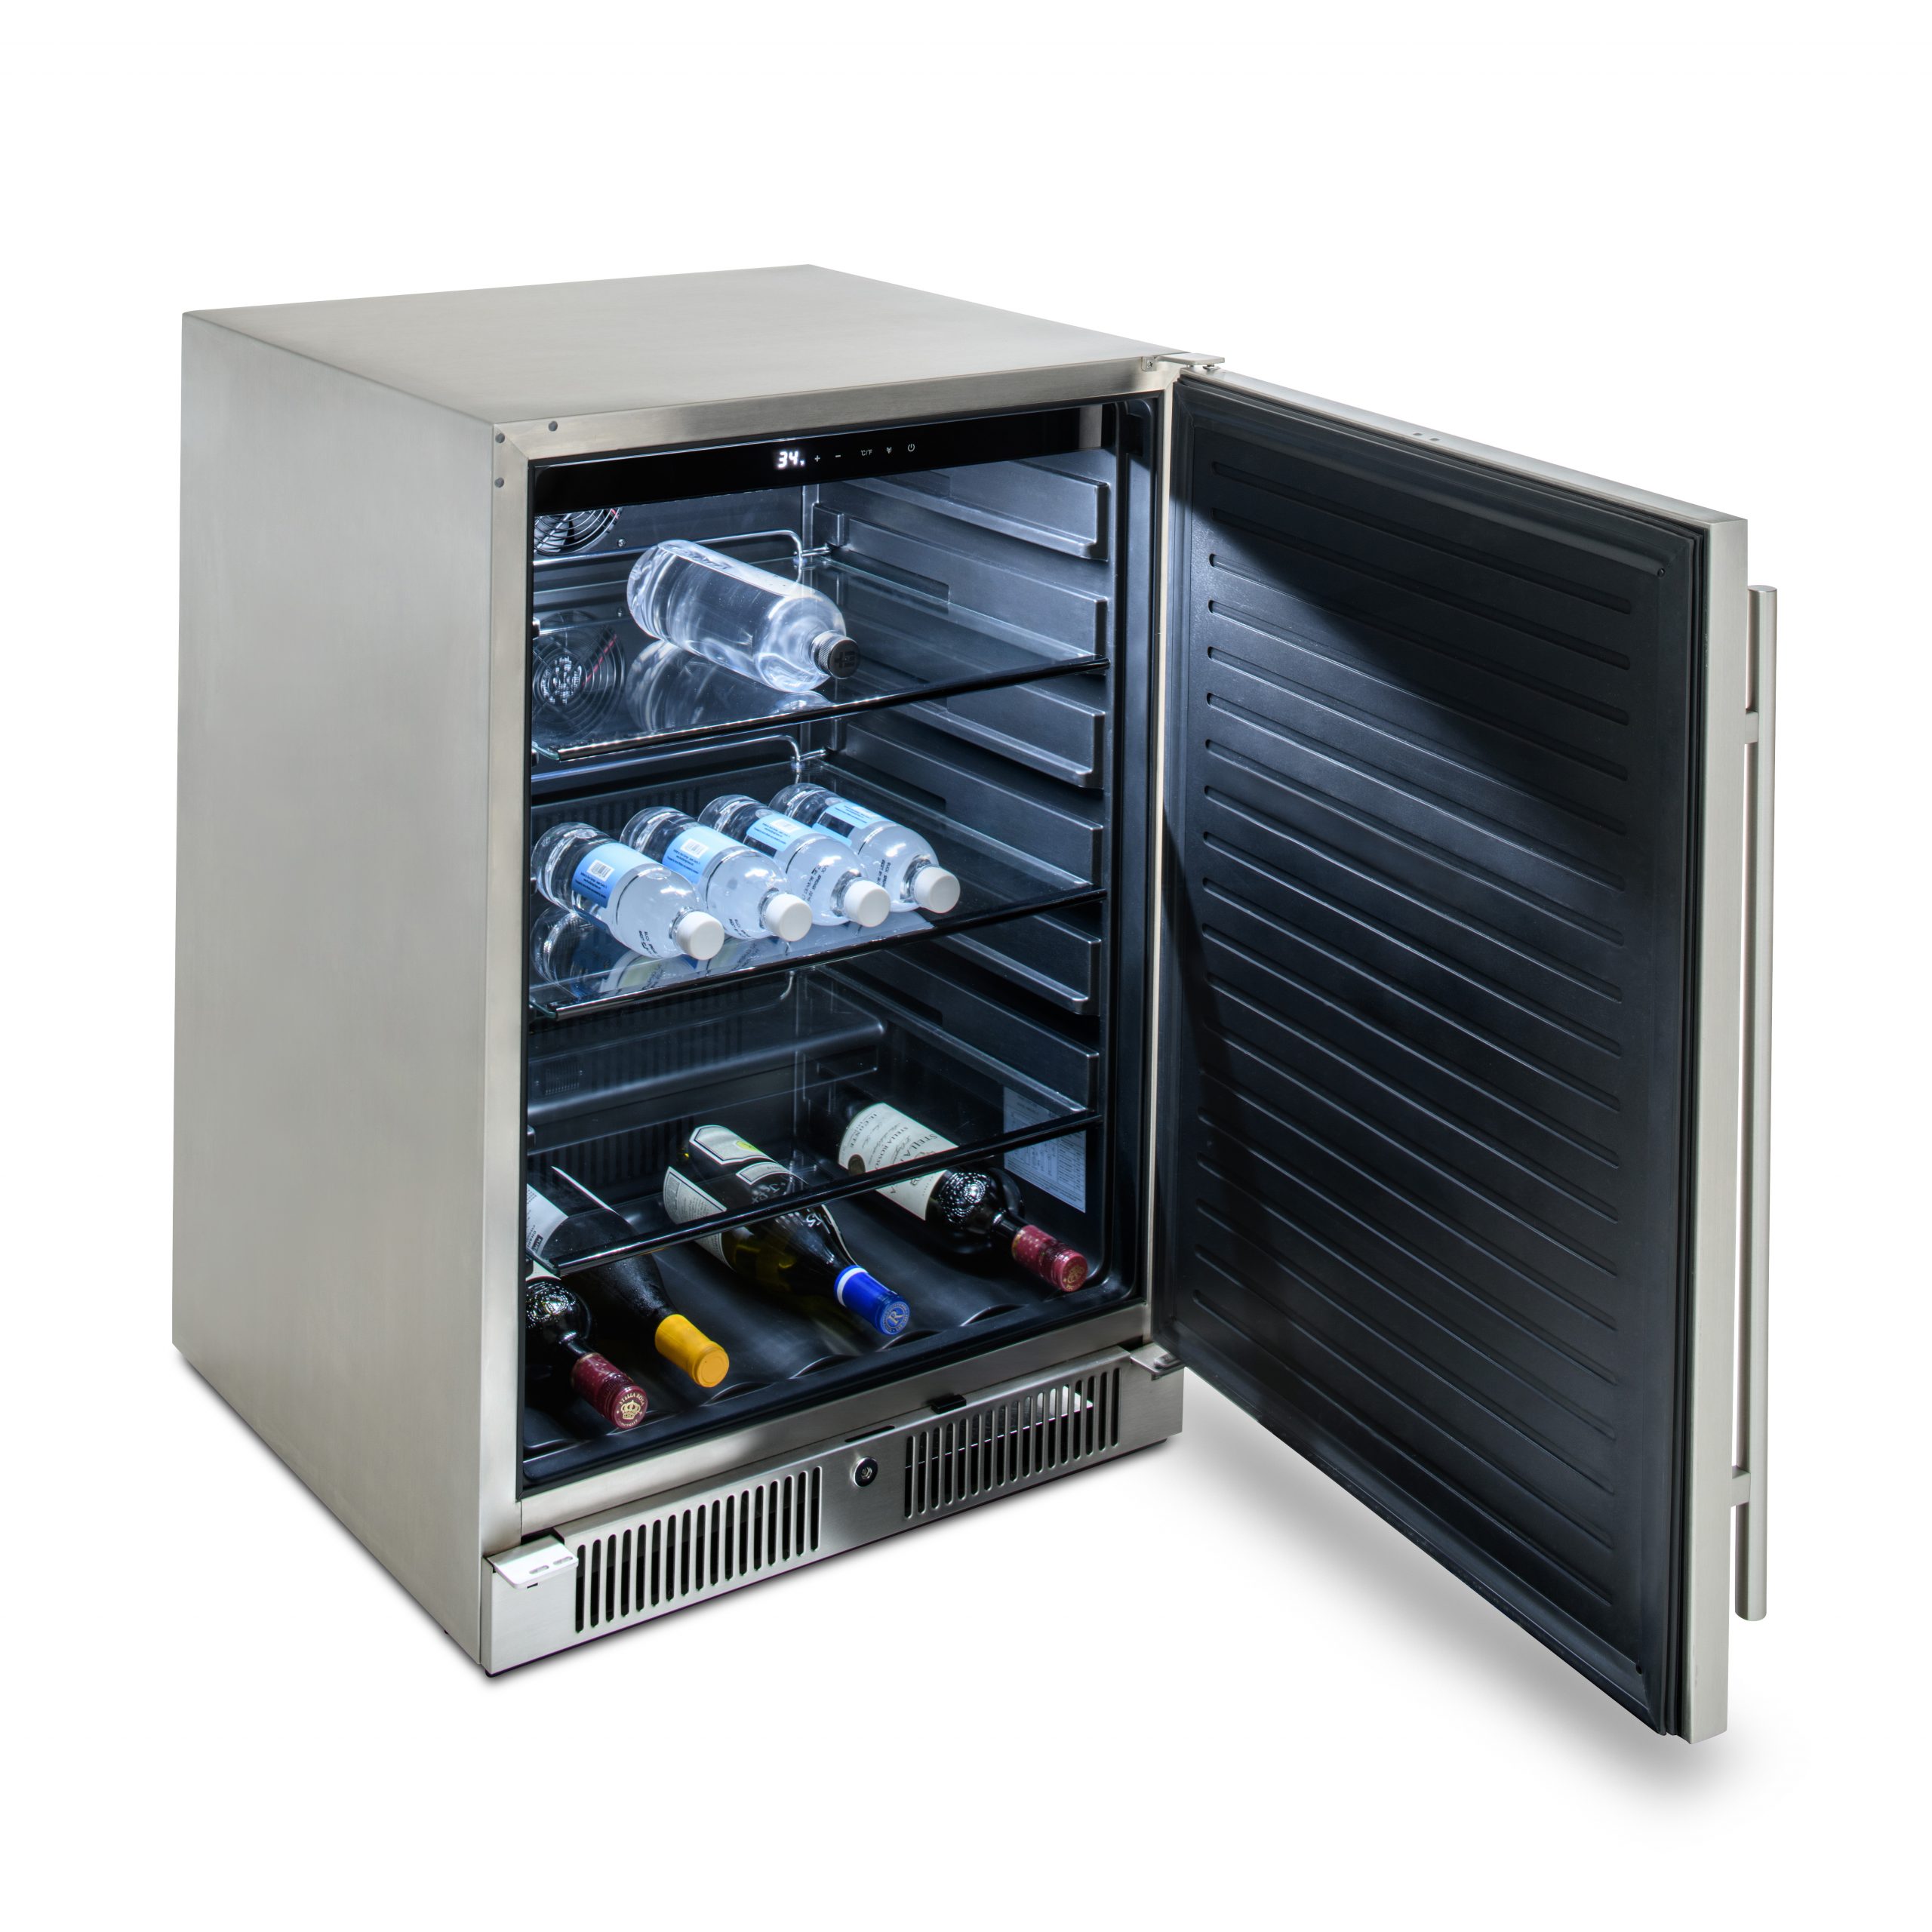 24 Outdoor Refrigerator - BLZ-SSRF-5.5 - Blaze Grills